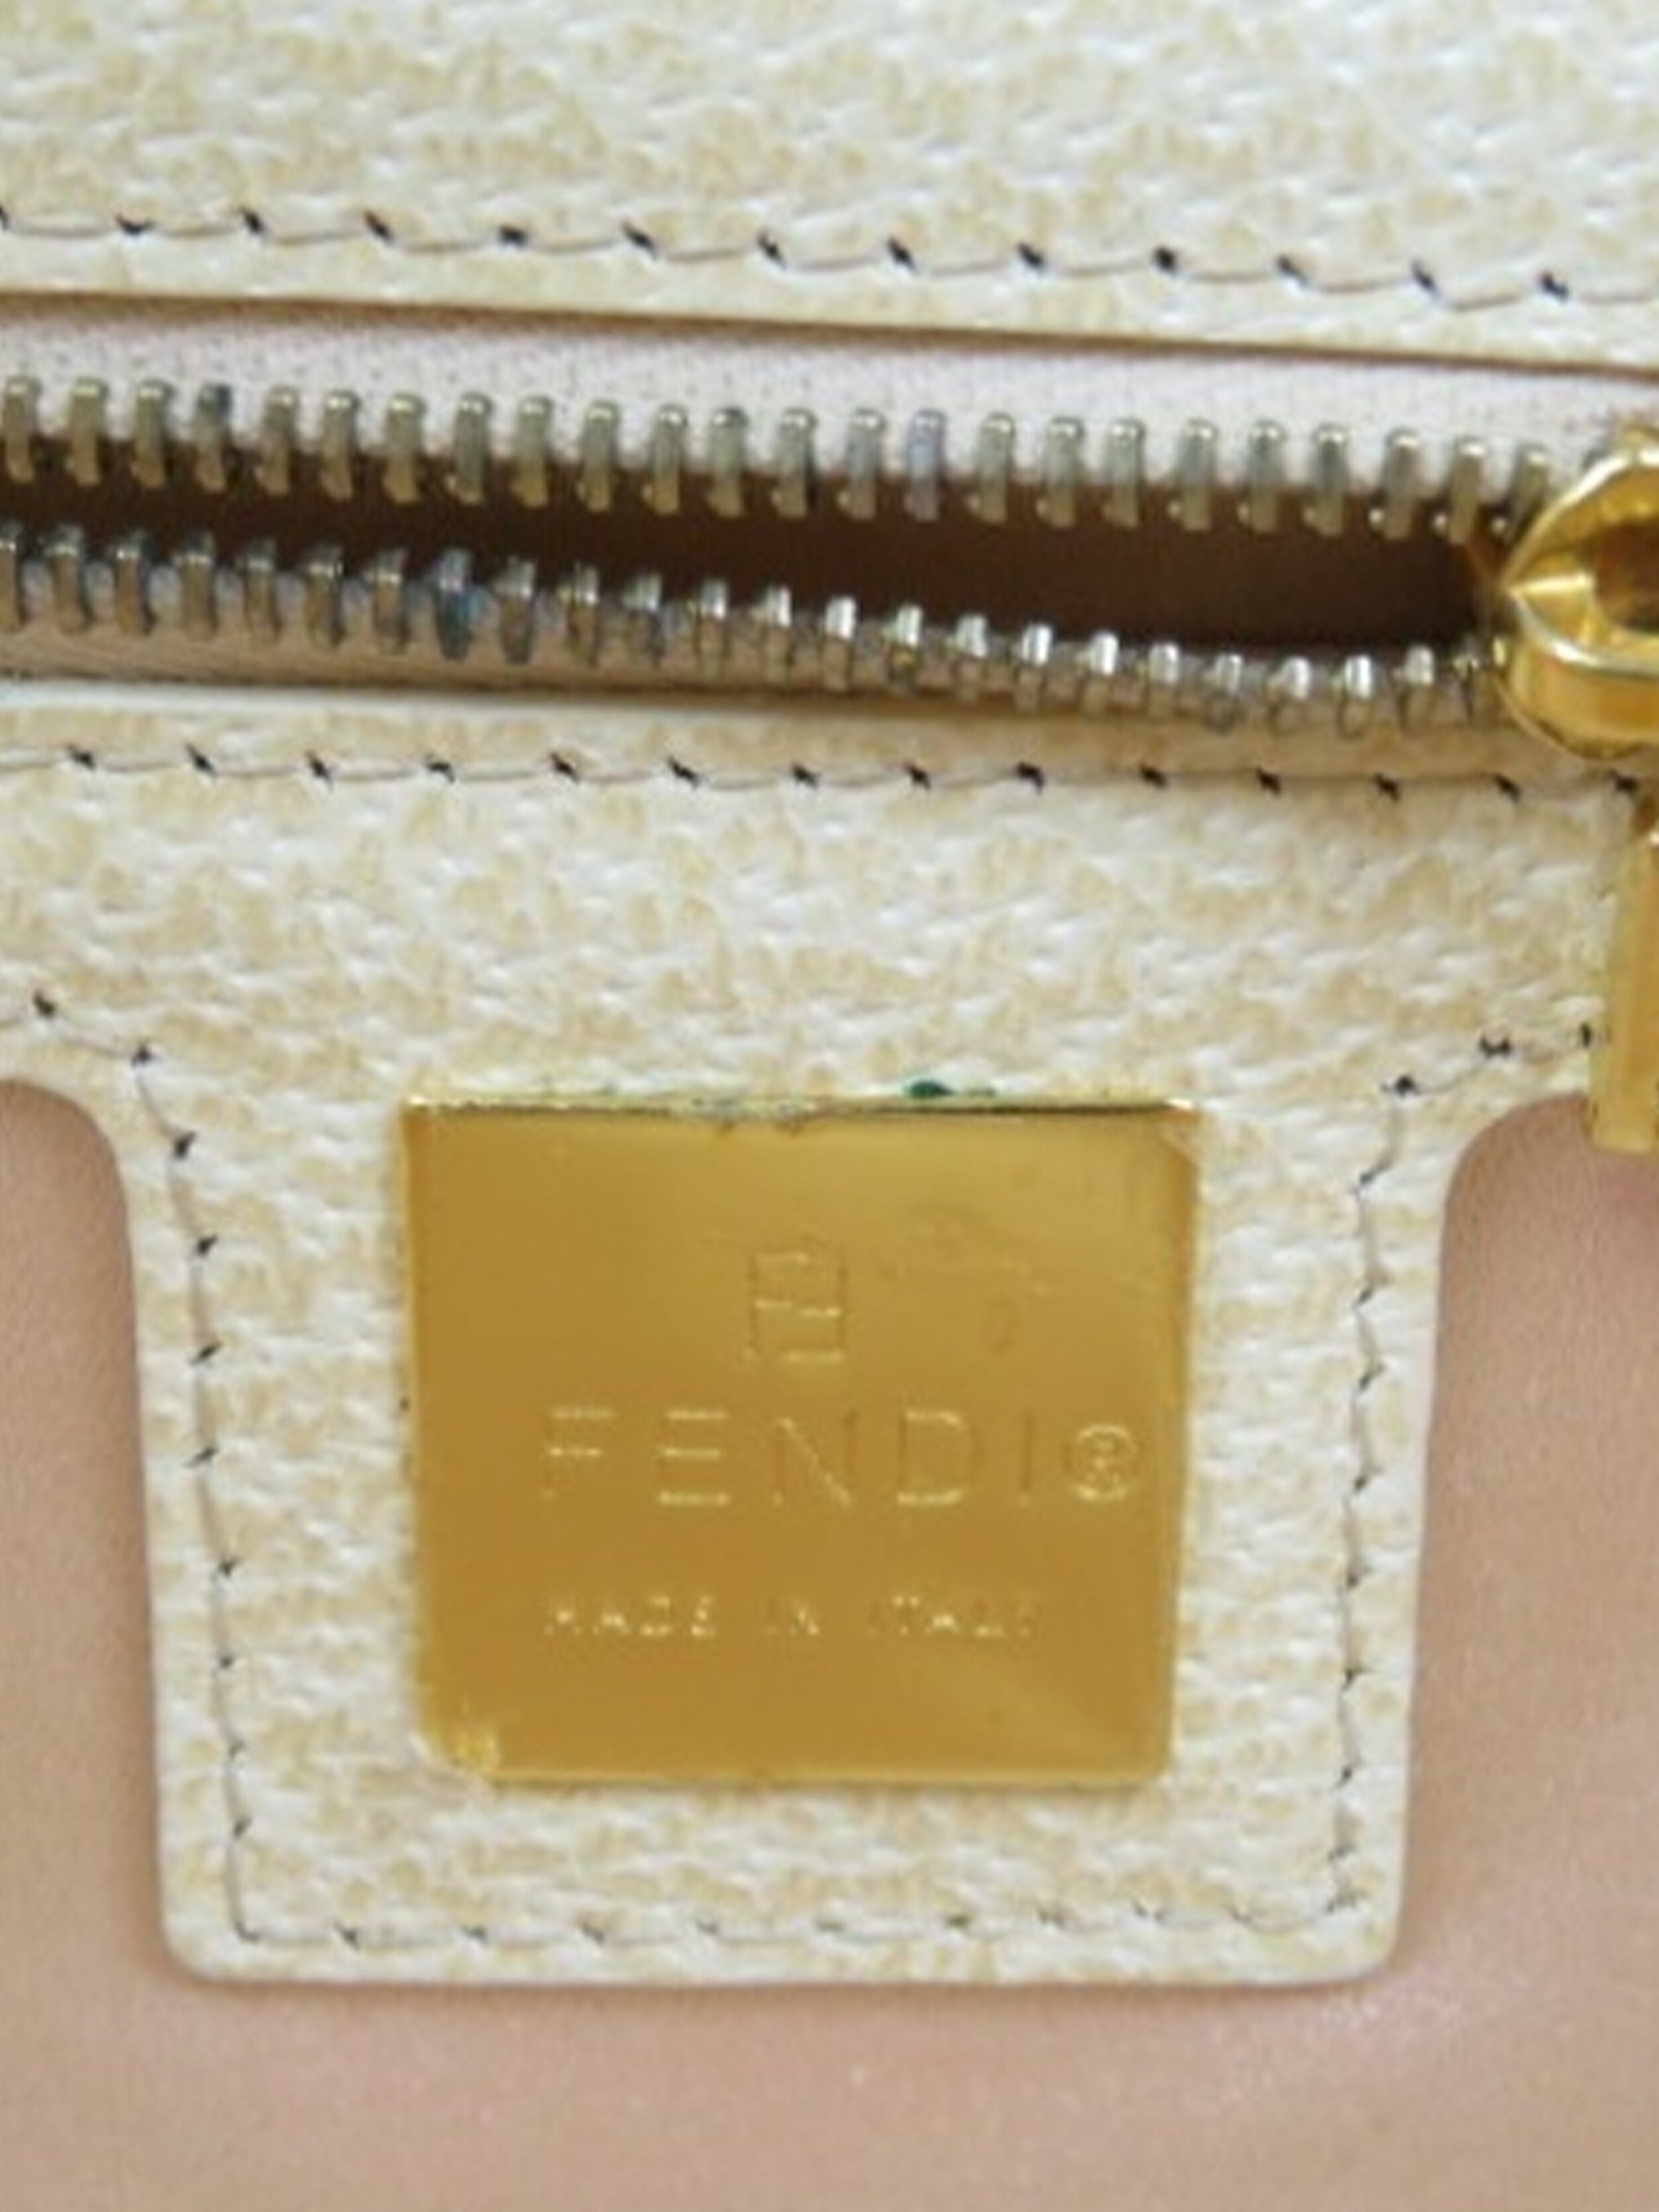 Vintage Fendi Flap Baguette Handbag ca. 2000